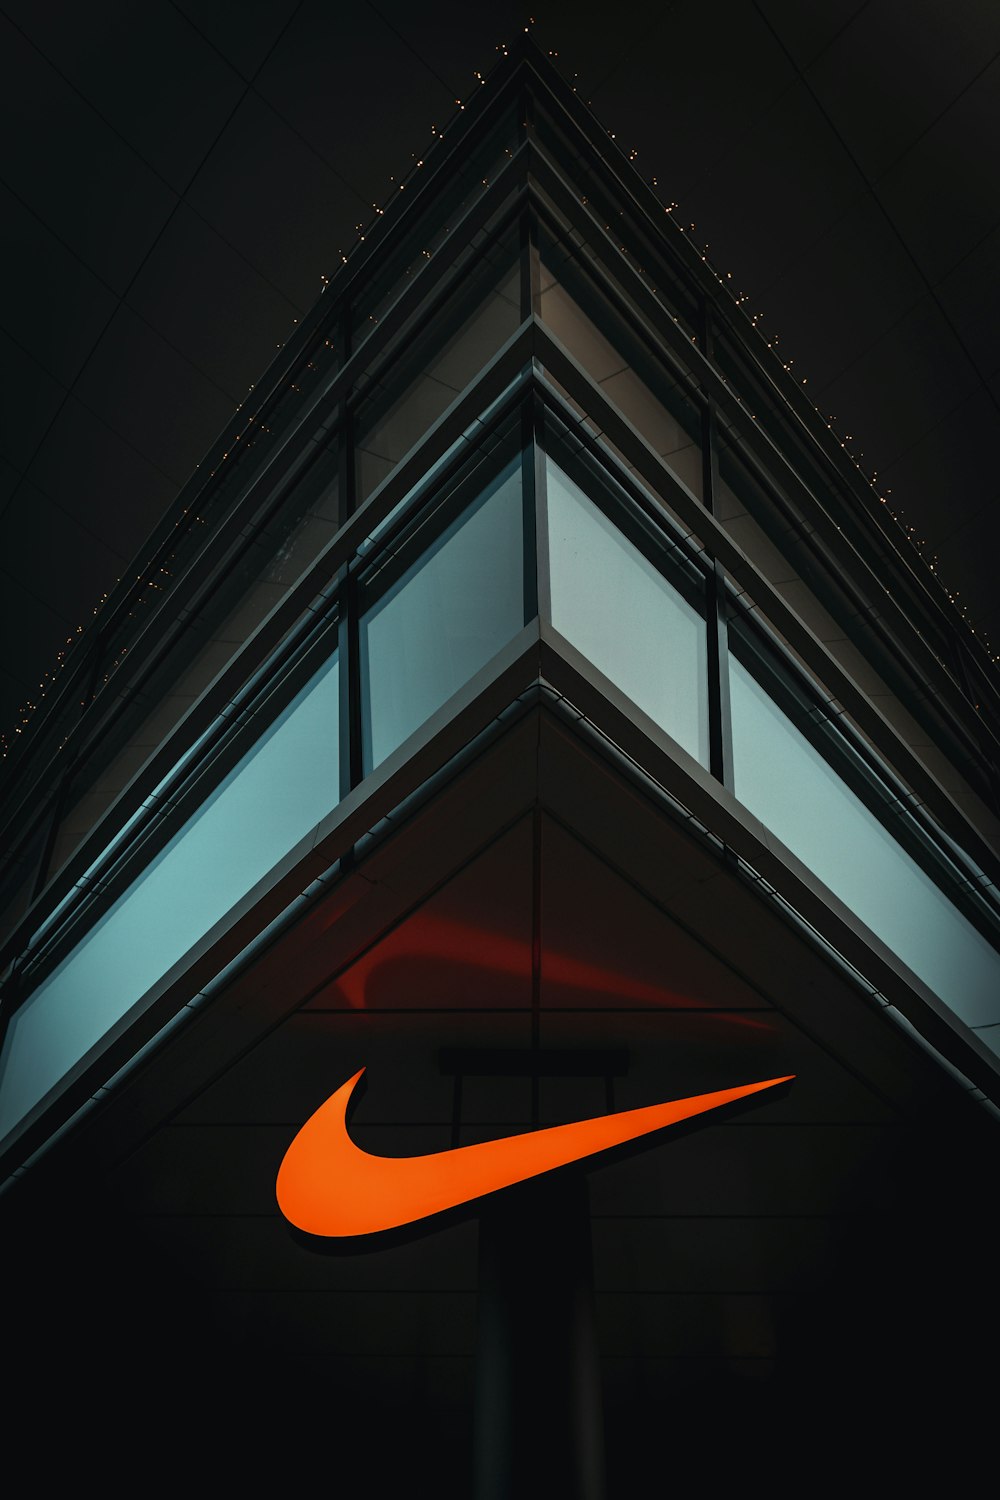 creciendo falta Excéntrico Nike Wallpapers: Descarga HD gratuita [500+ HQ] | Unsplash